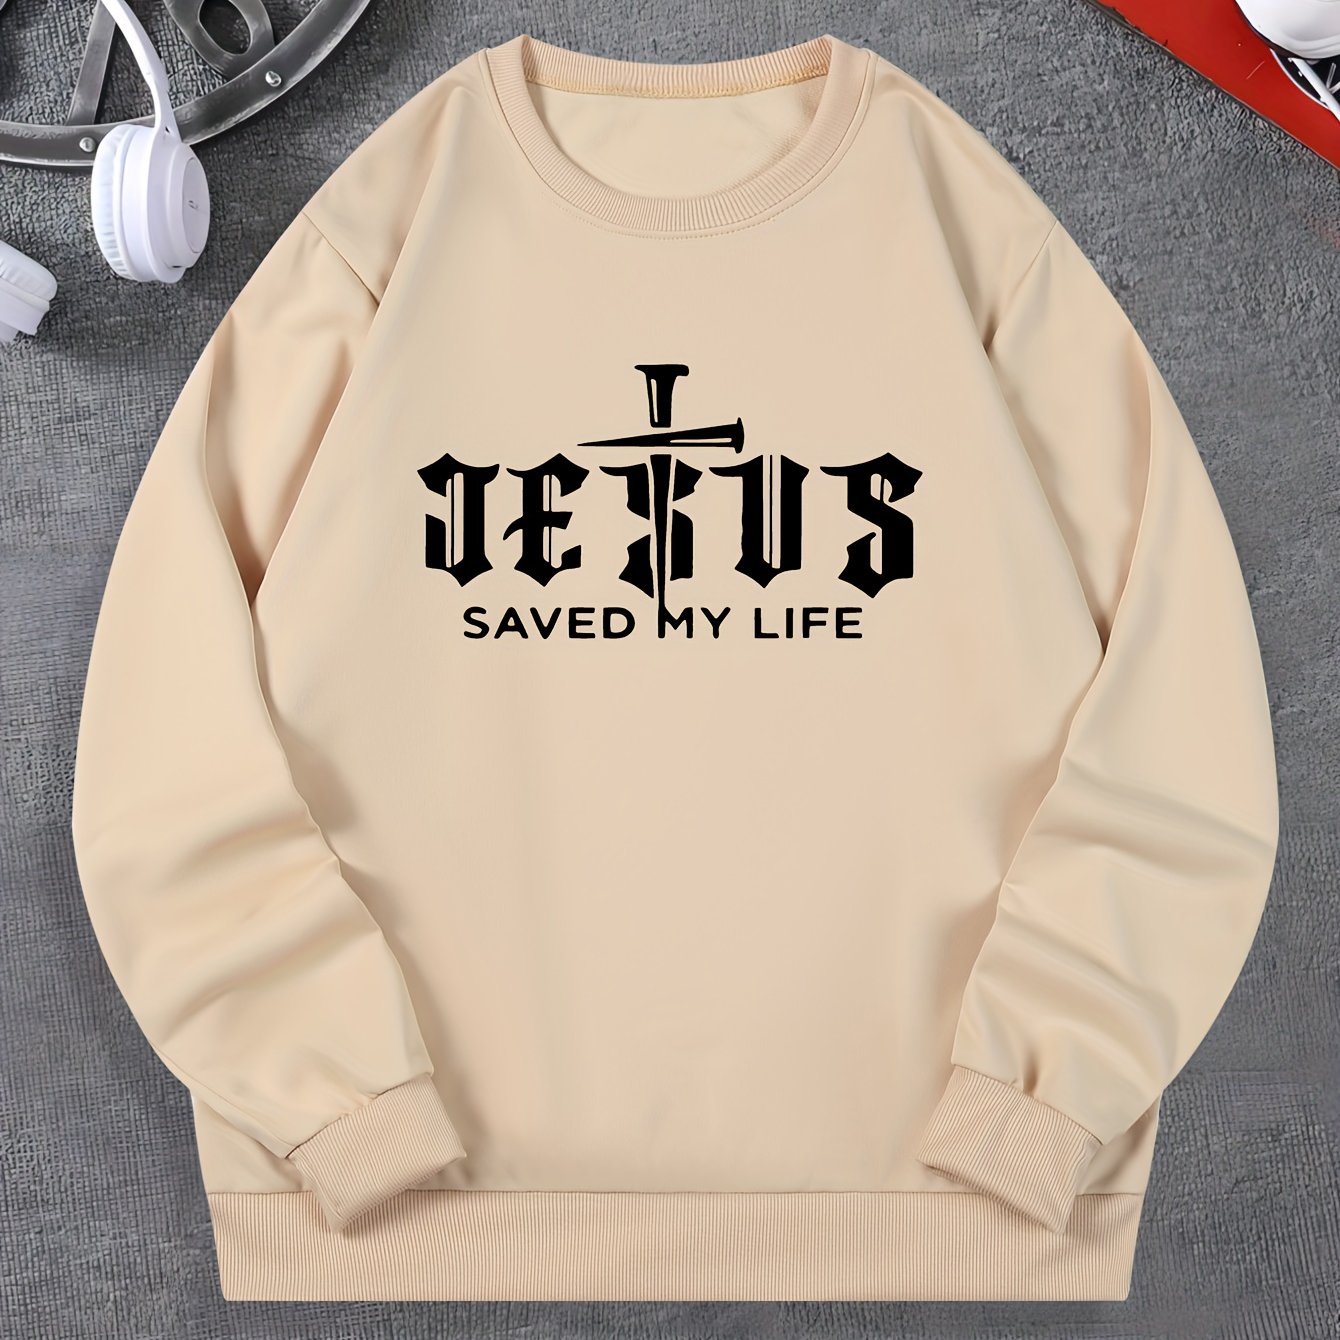 JESUS SAVED MY LIFE Men's Christian Pullover Sweatshirt claimedbygoddesigns